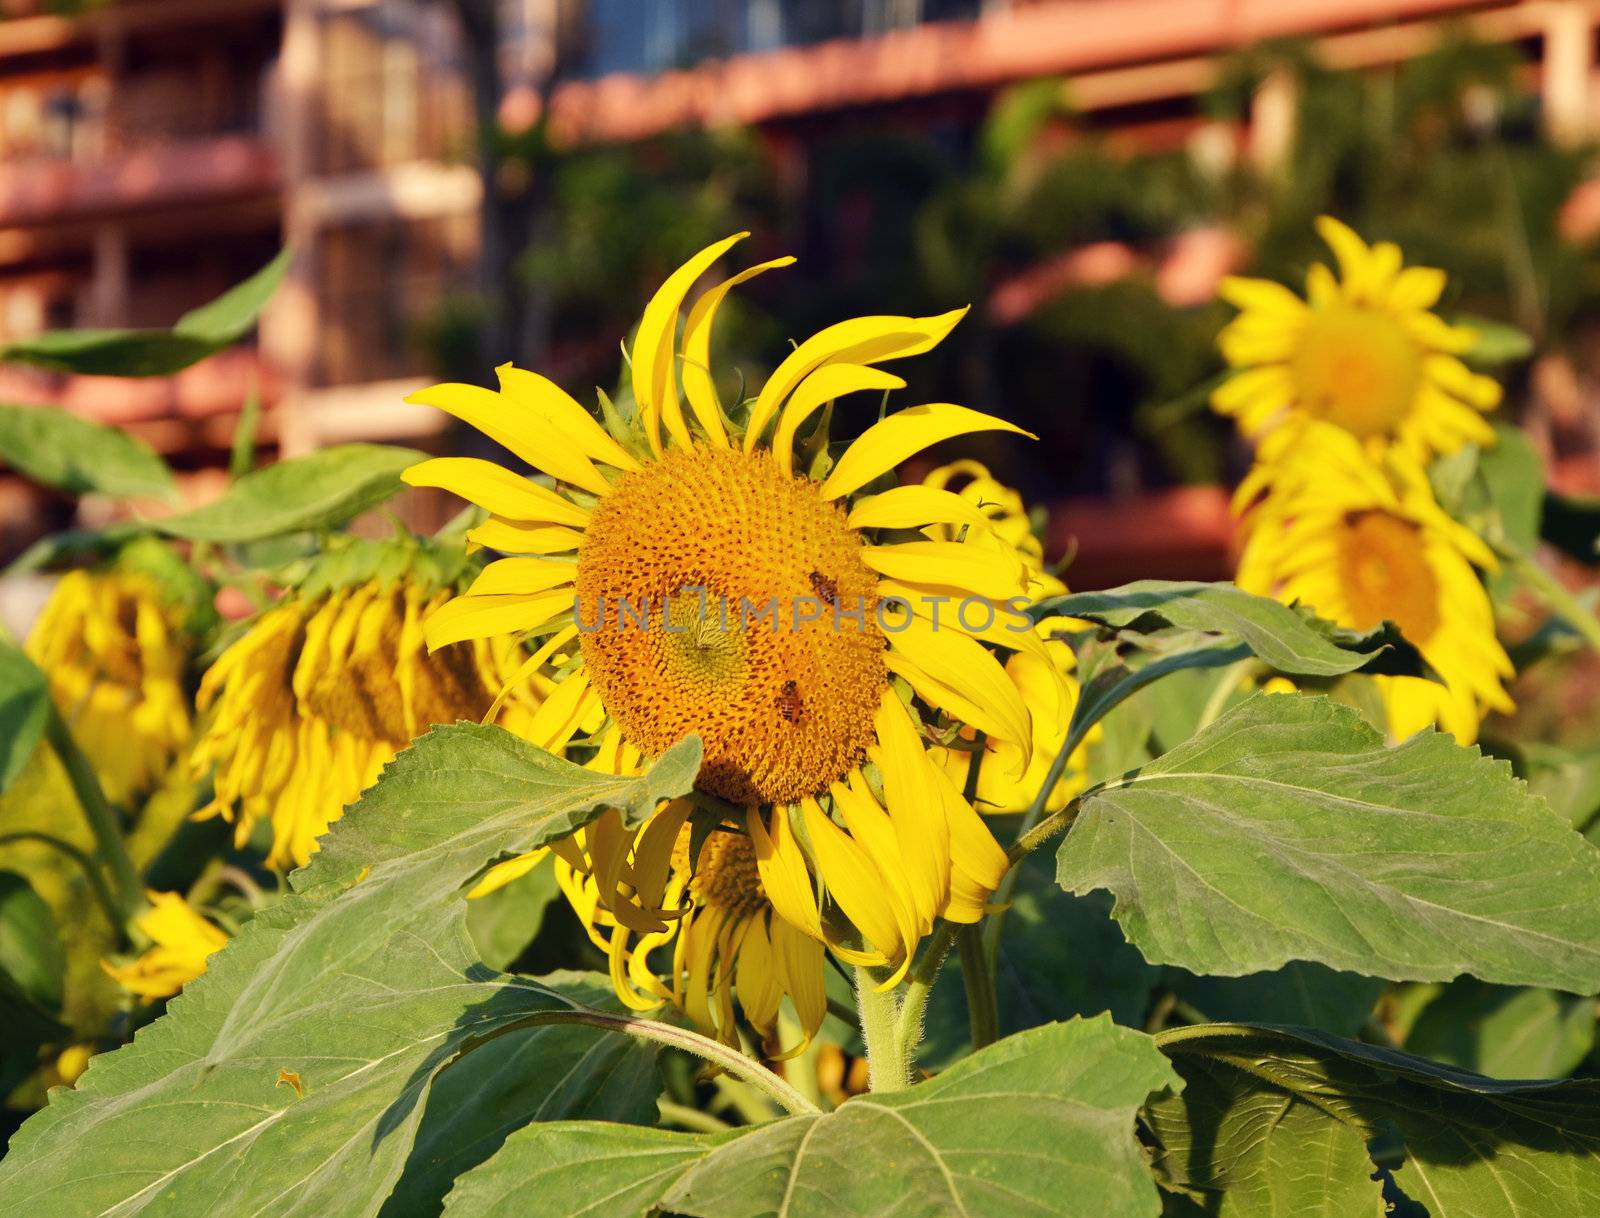 Big beautiful sunflowers outdoors, Thailand